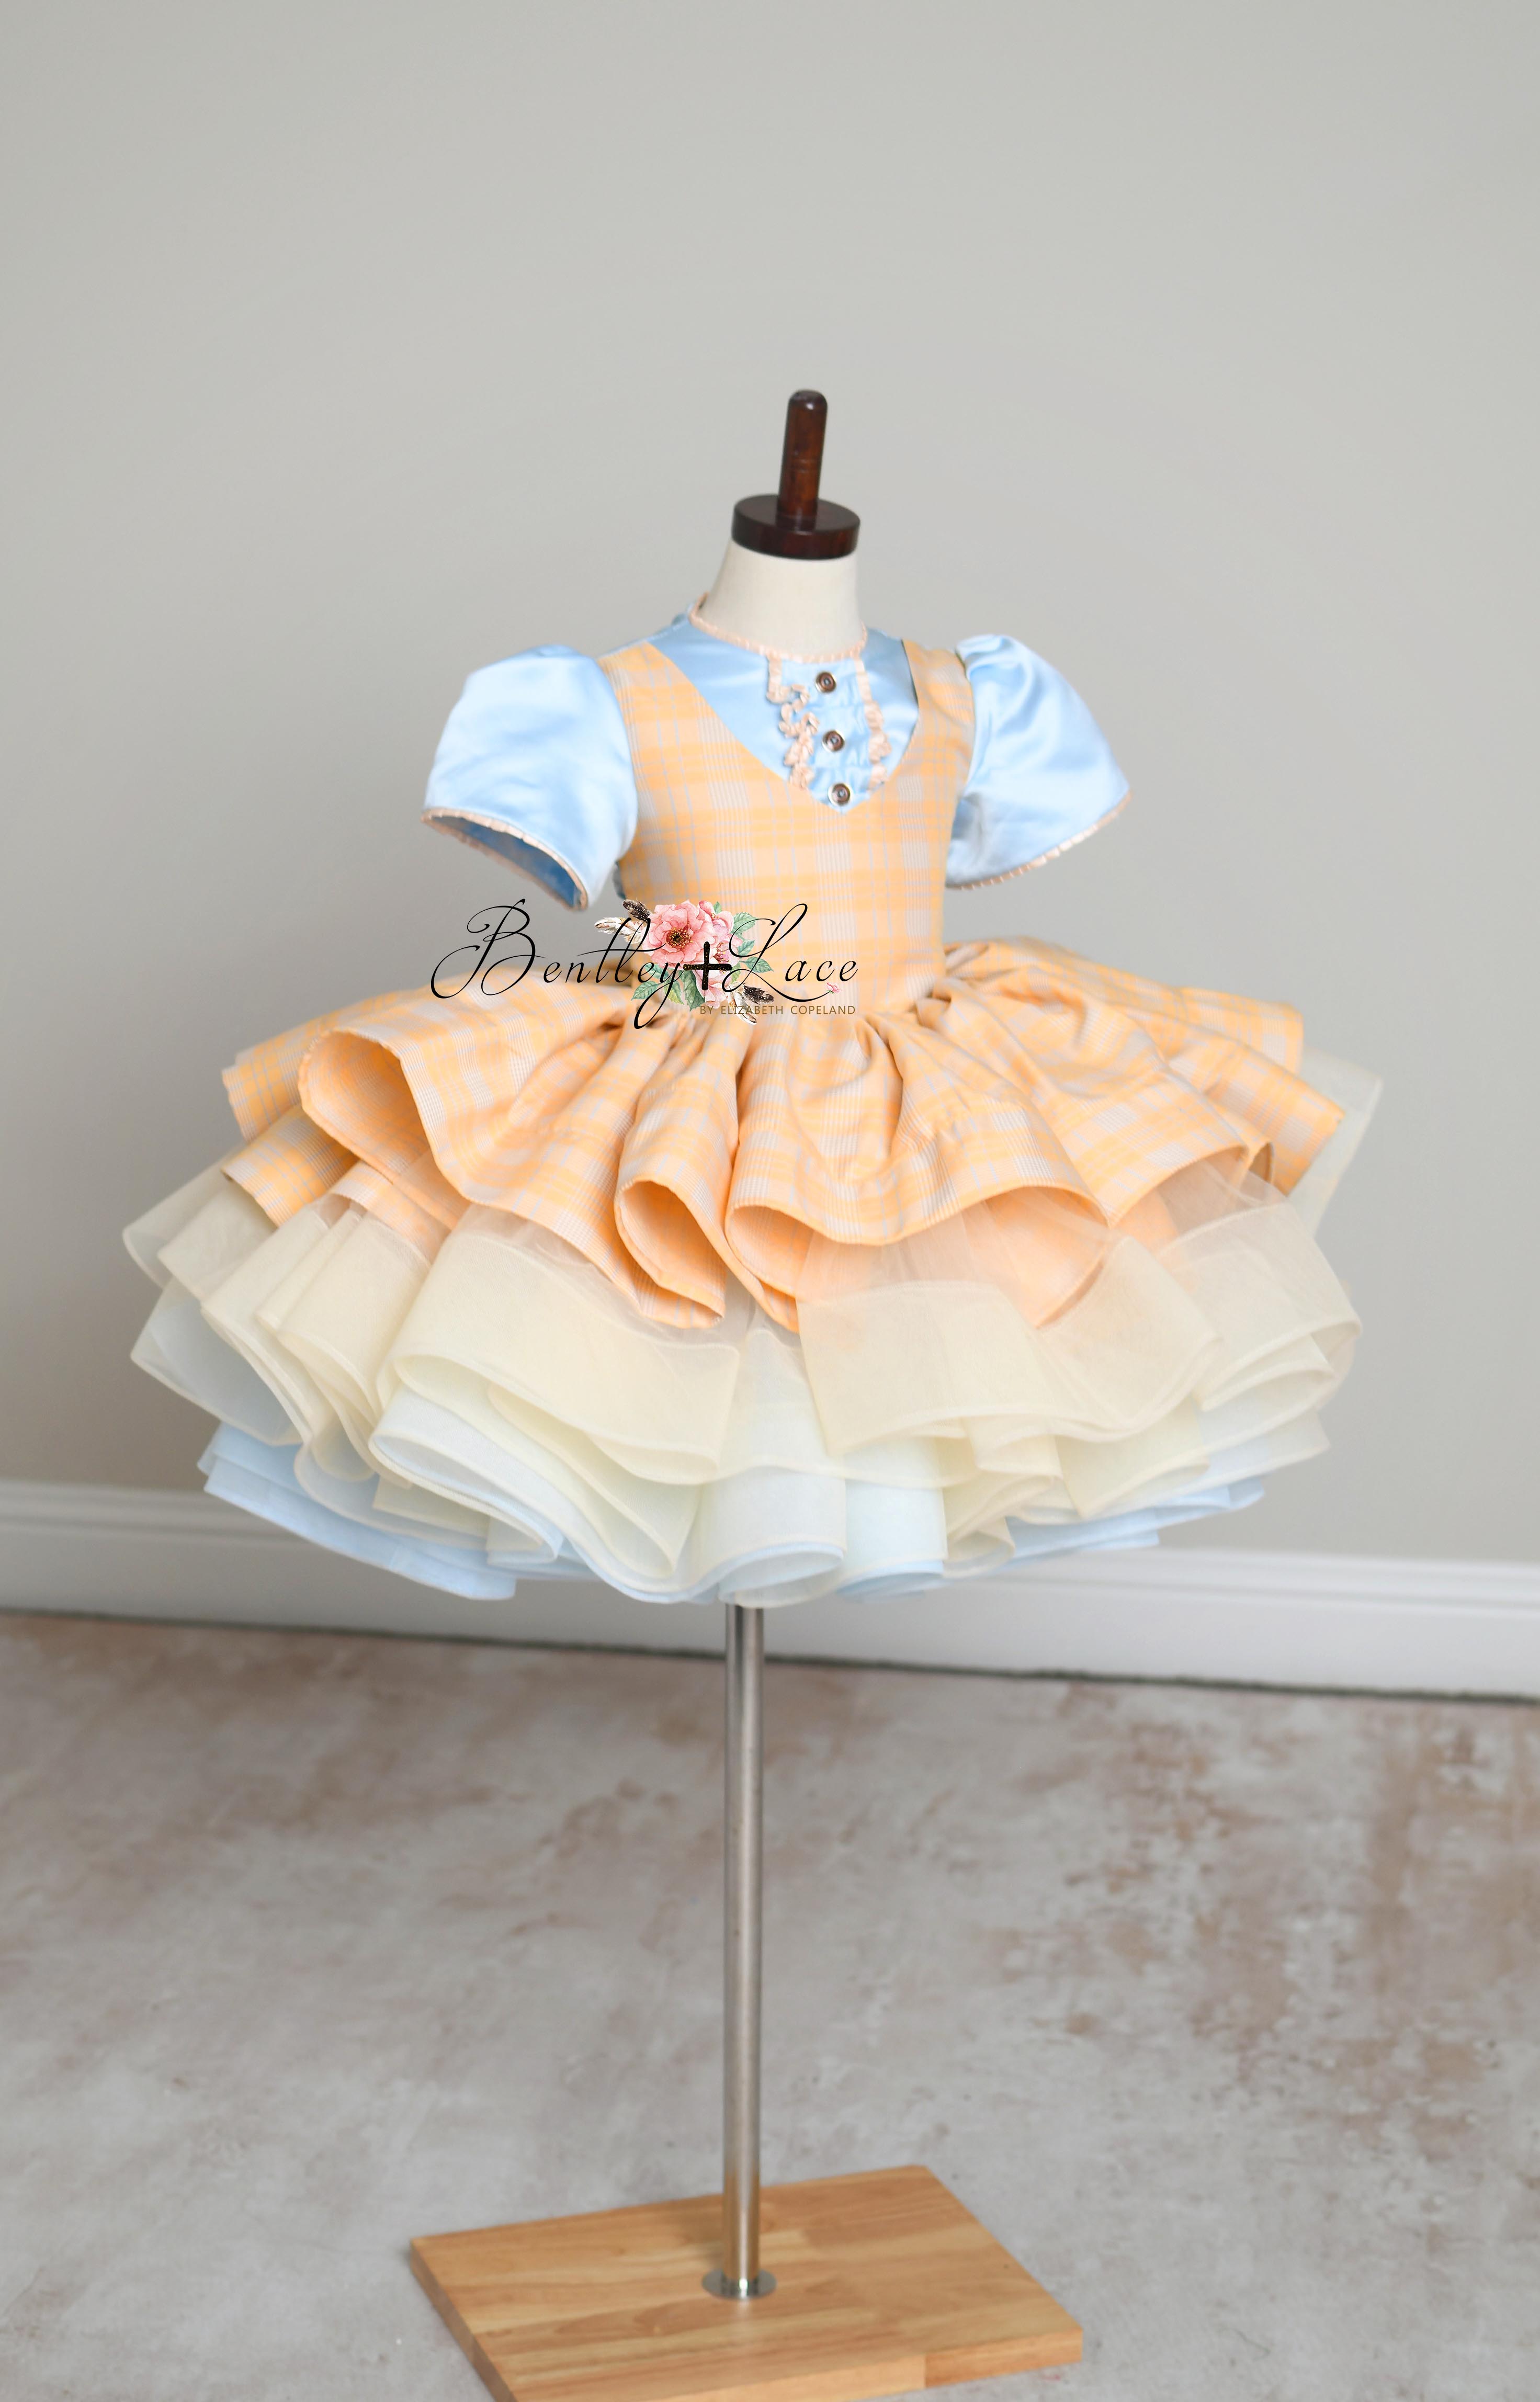 "Bluebird Breeze" Vintagte Petal Dress - Editorial Dress, Couture Gown, Special Occasion Dress